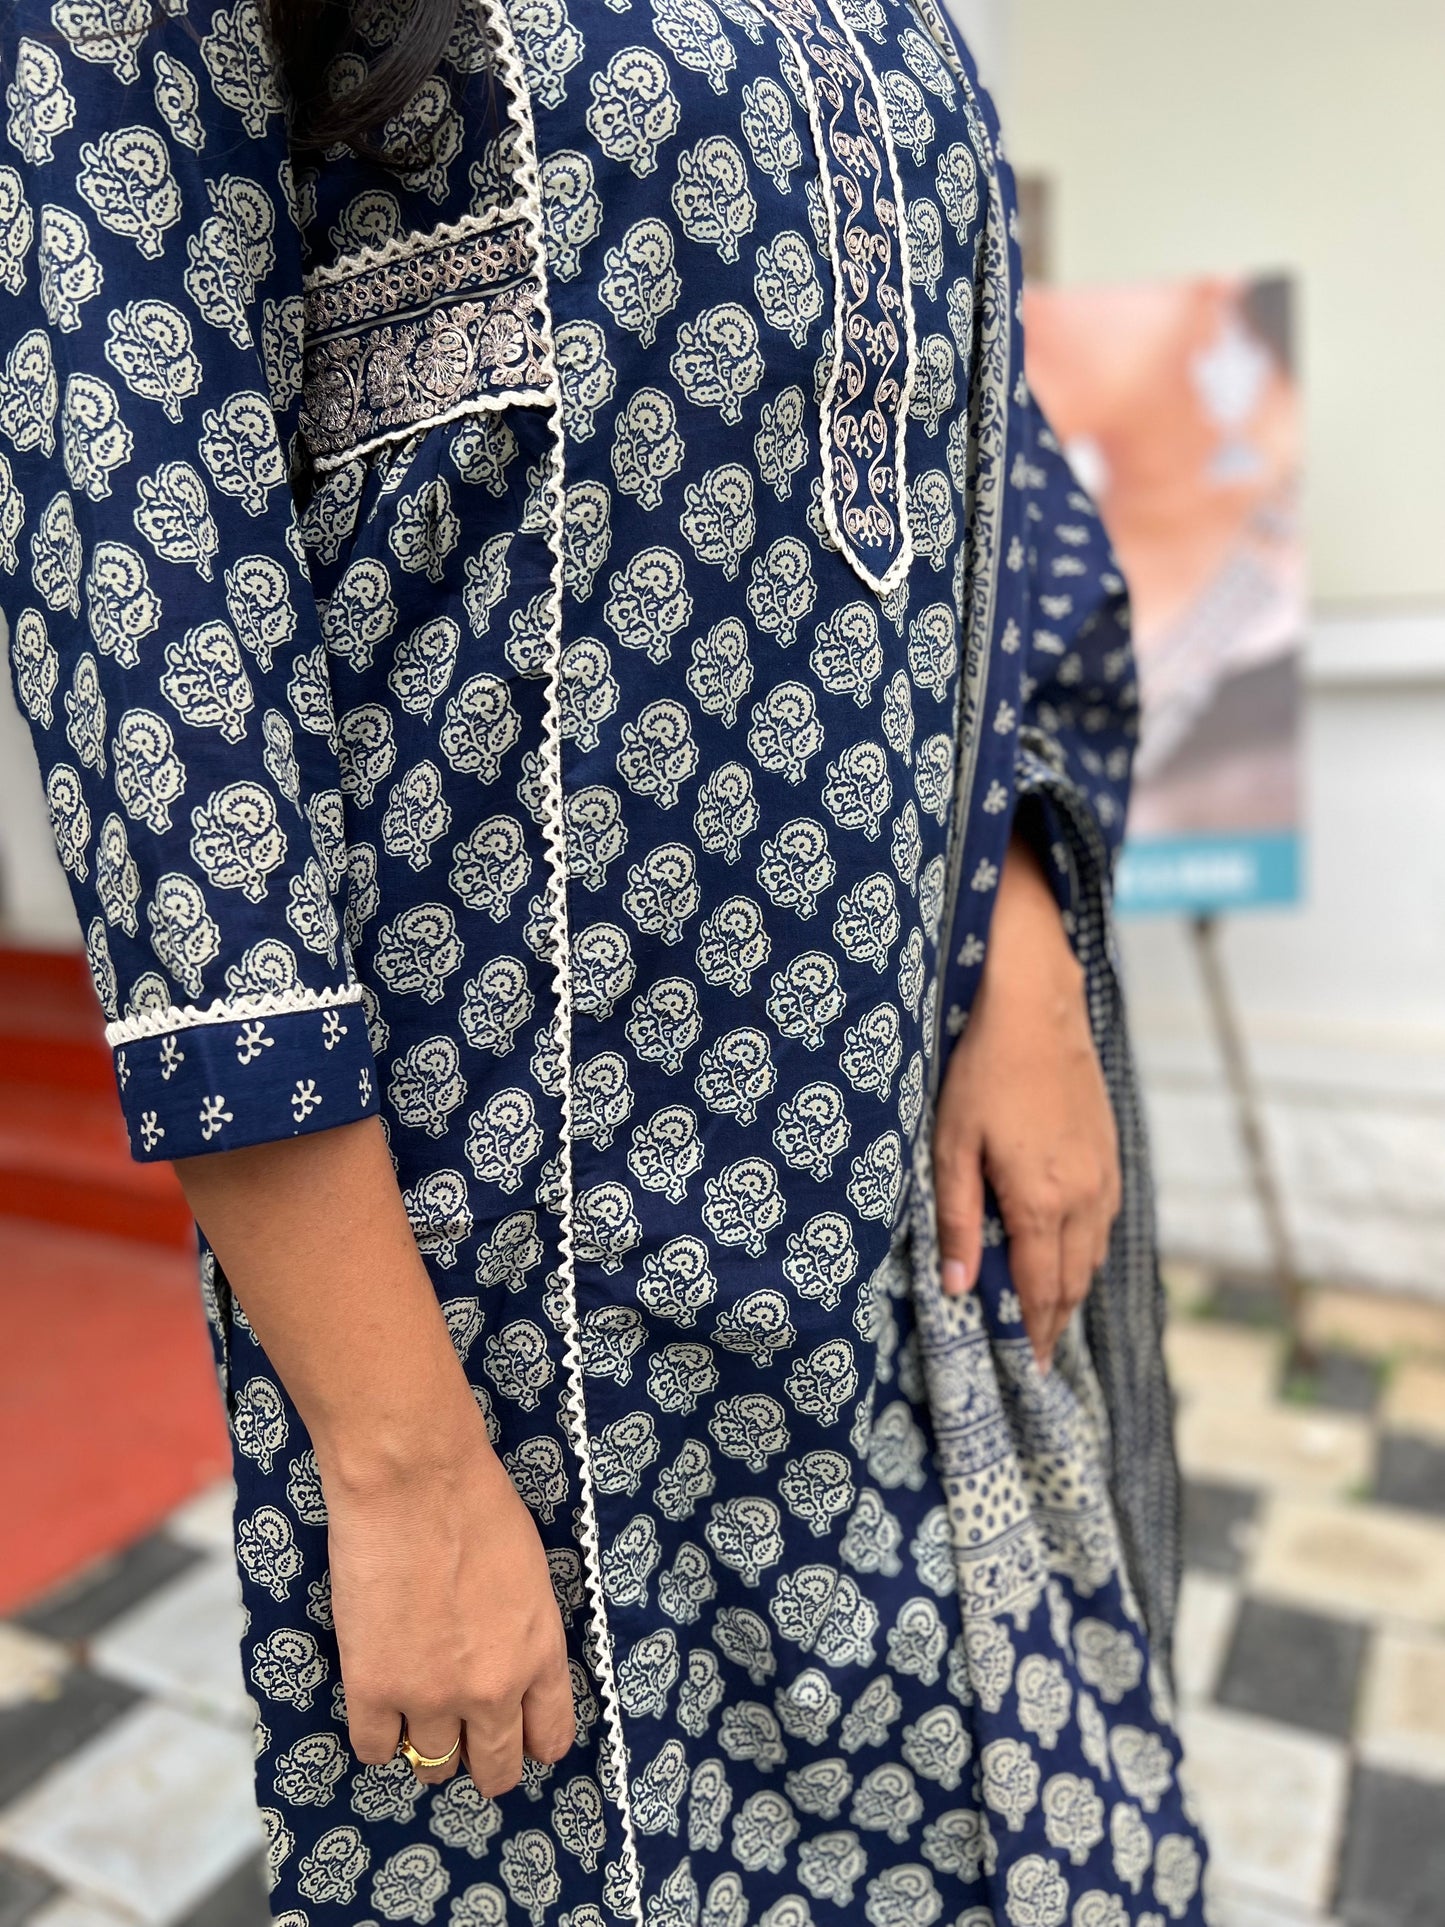 Southloom Stitched Cotton Salwar Set in Dark Blue with Floral Prints